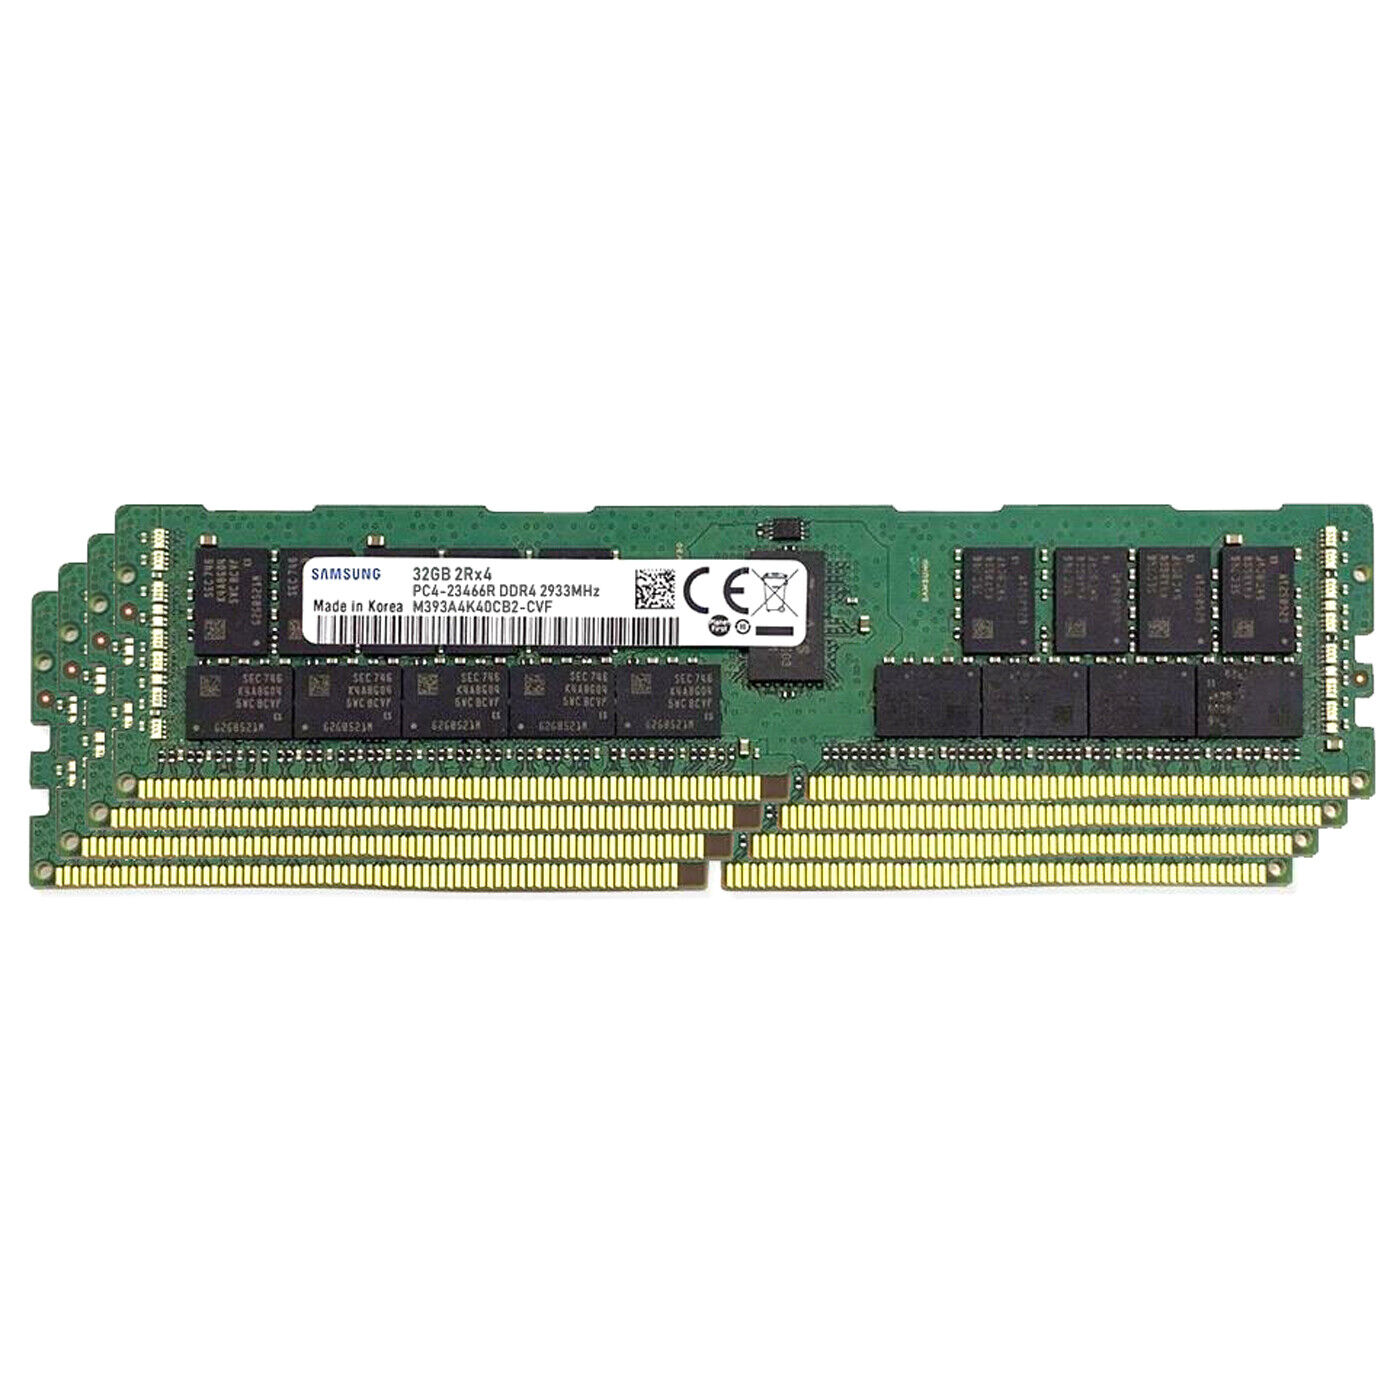 Samsung 128GB (4x 32GB) 2933MHz DDR4 ECC RDIMM Server Memory M393A4K40CB2-CVF